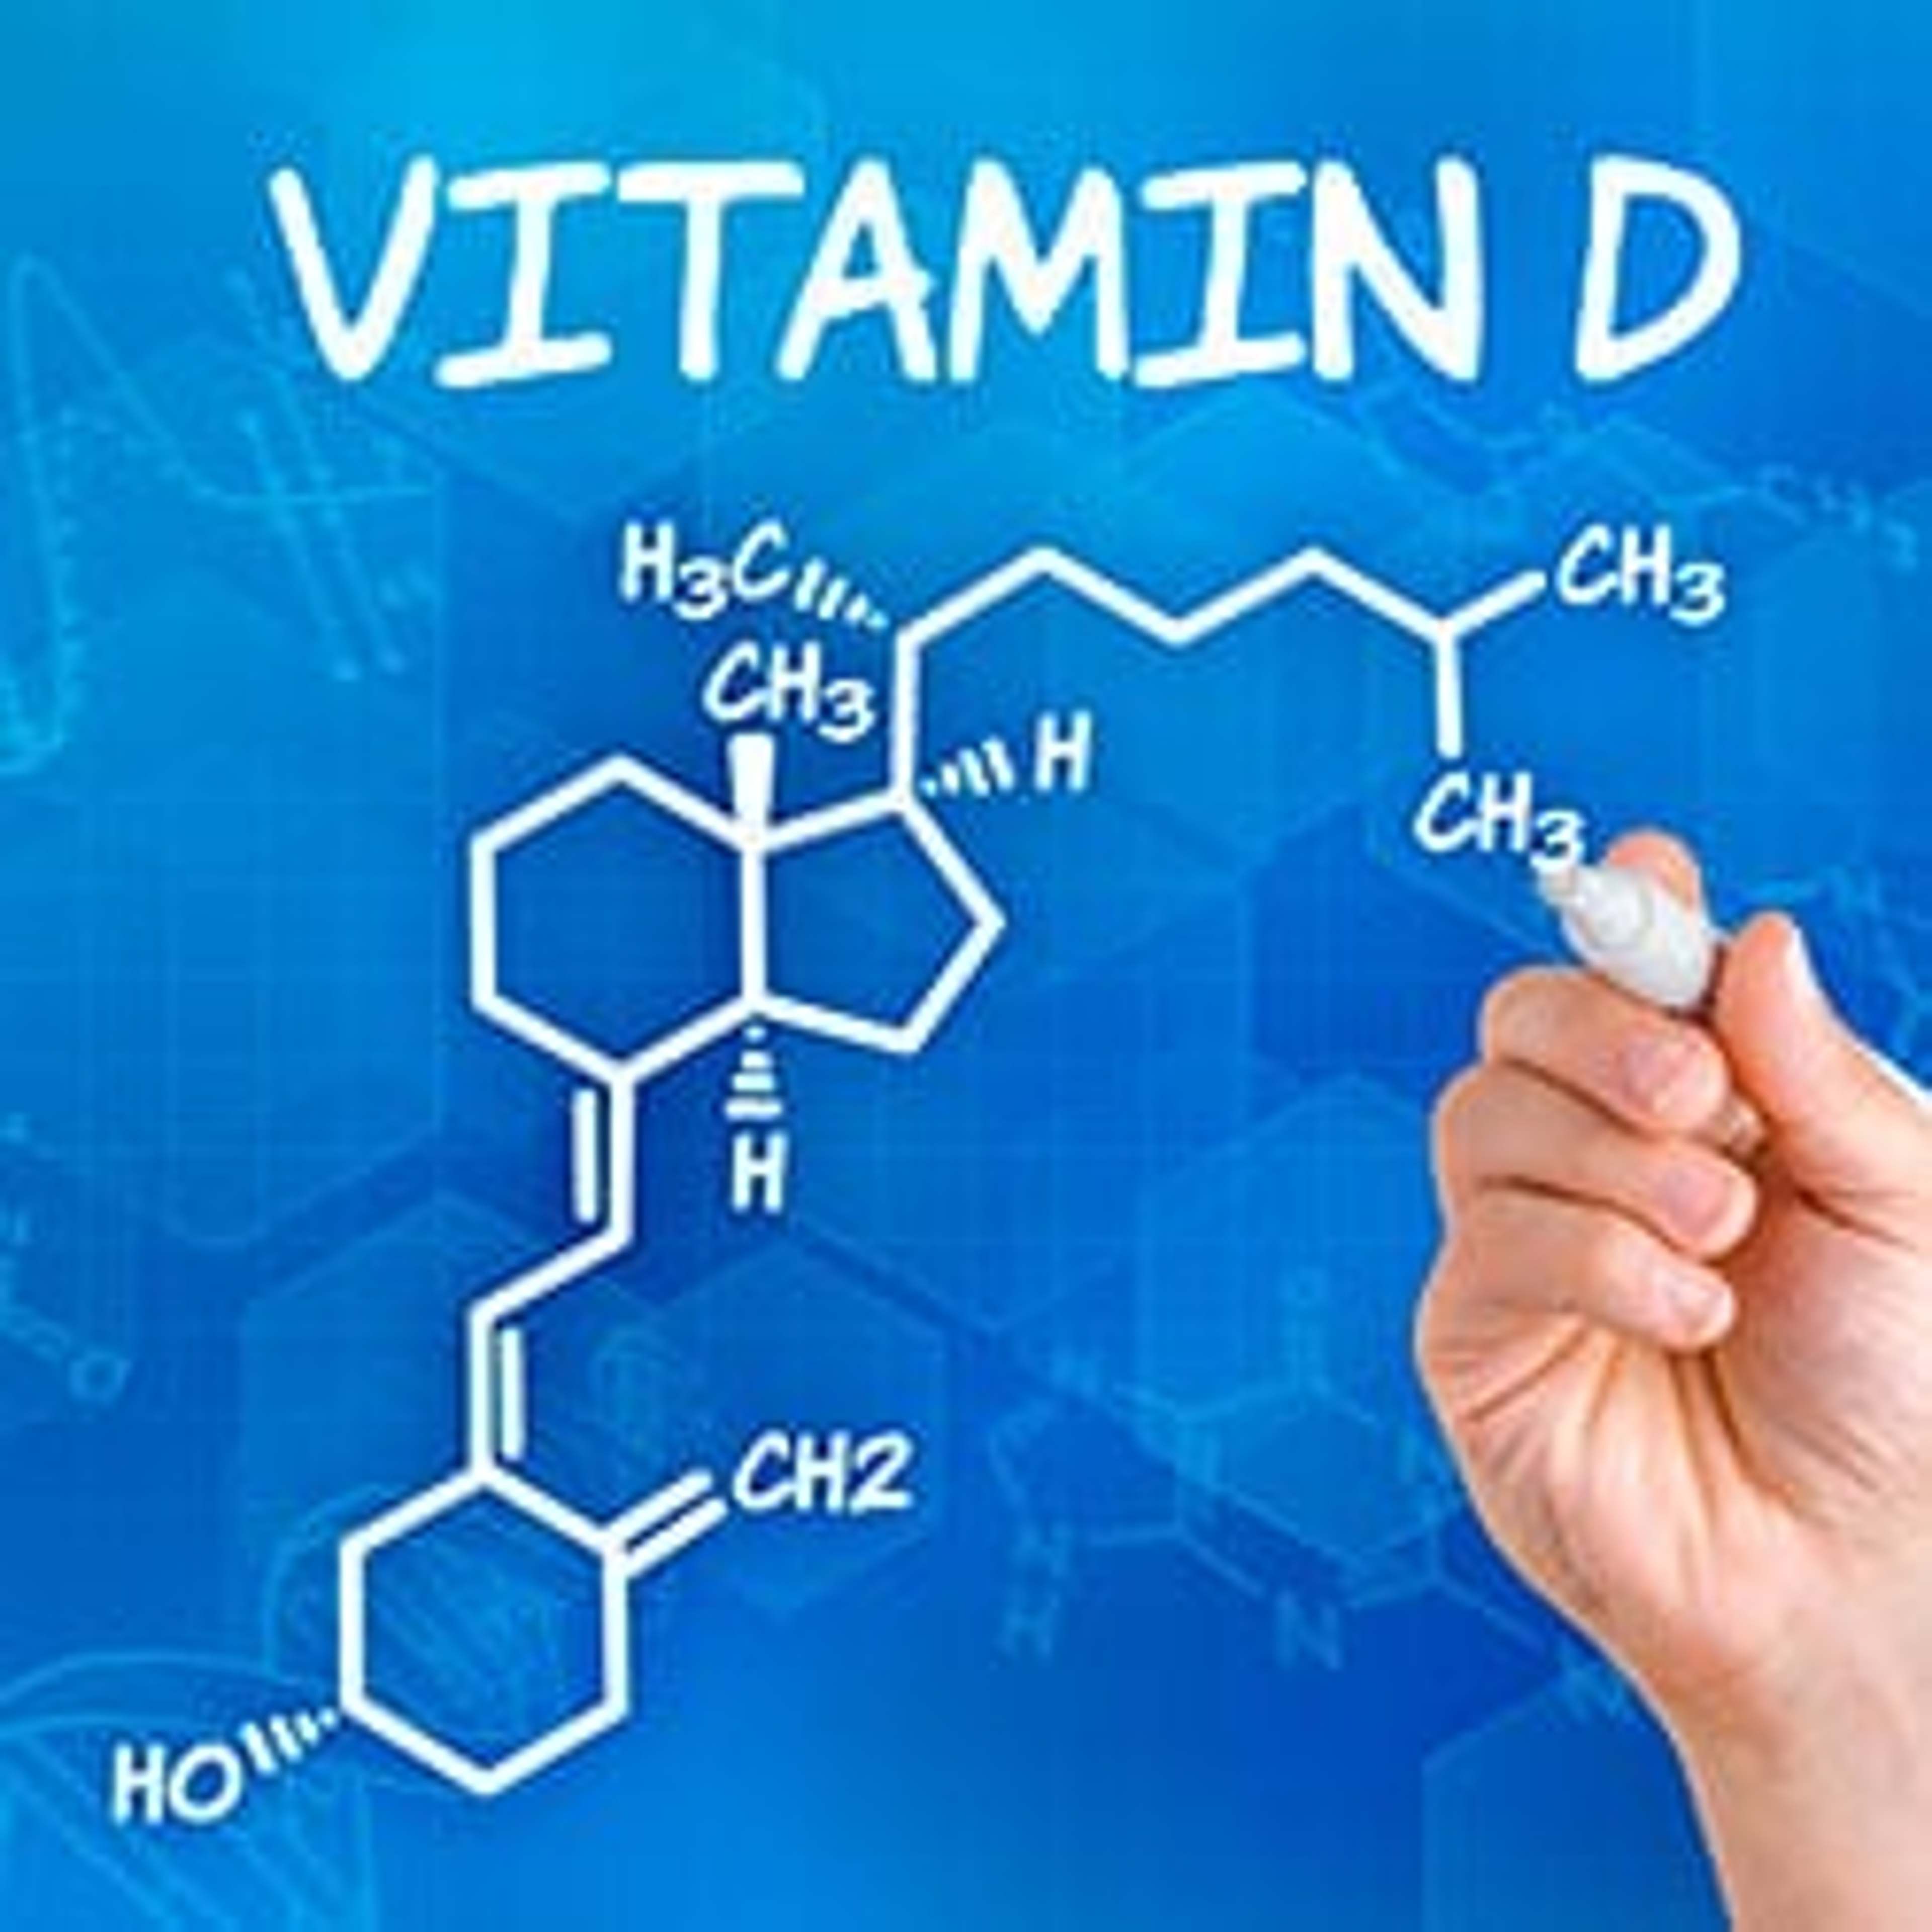 Vitamin D: Vital for health